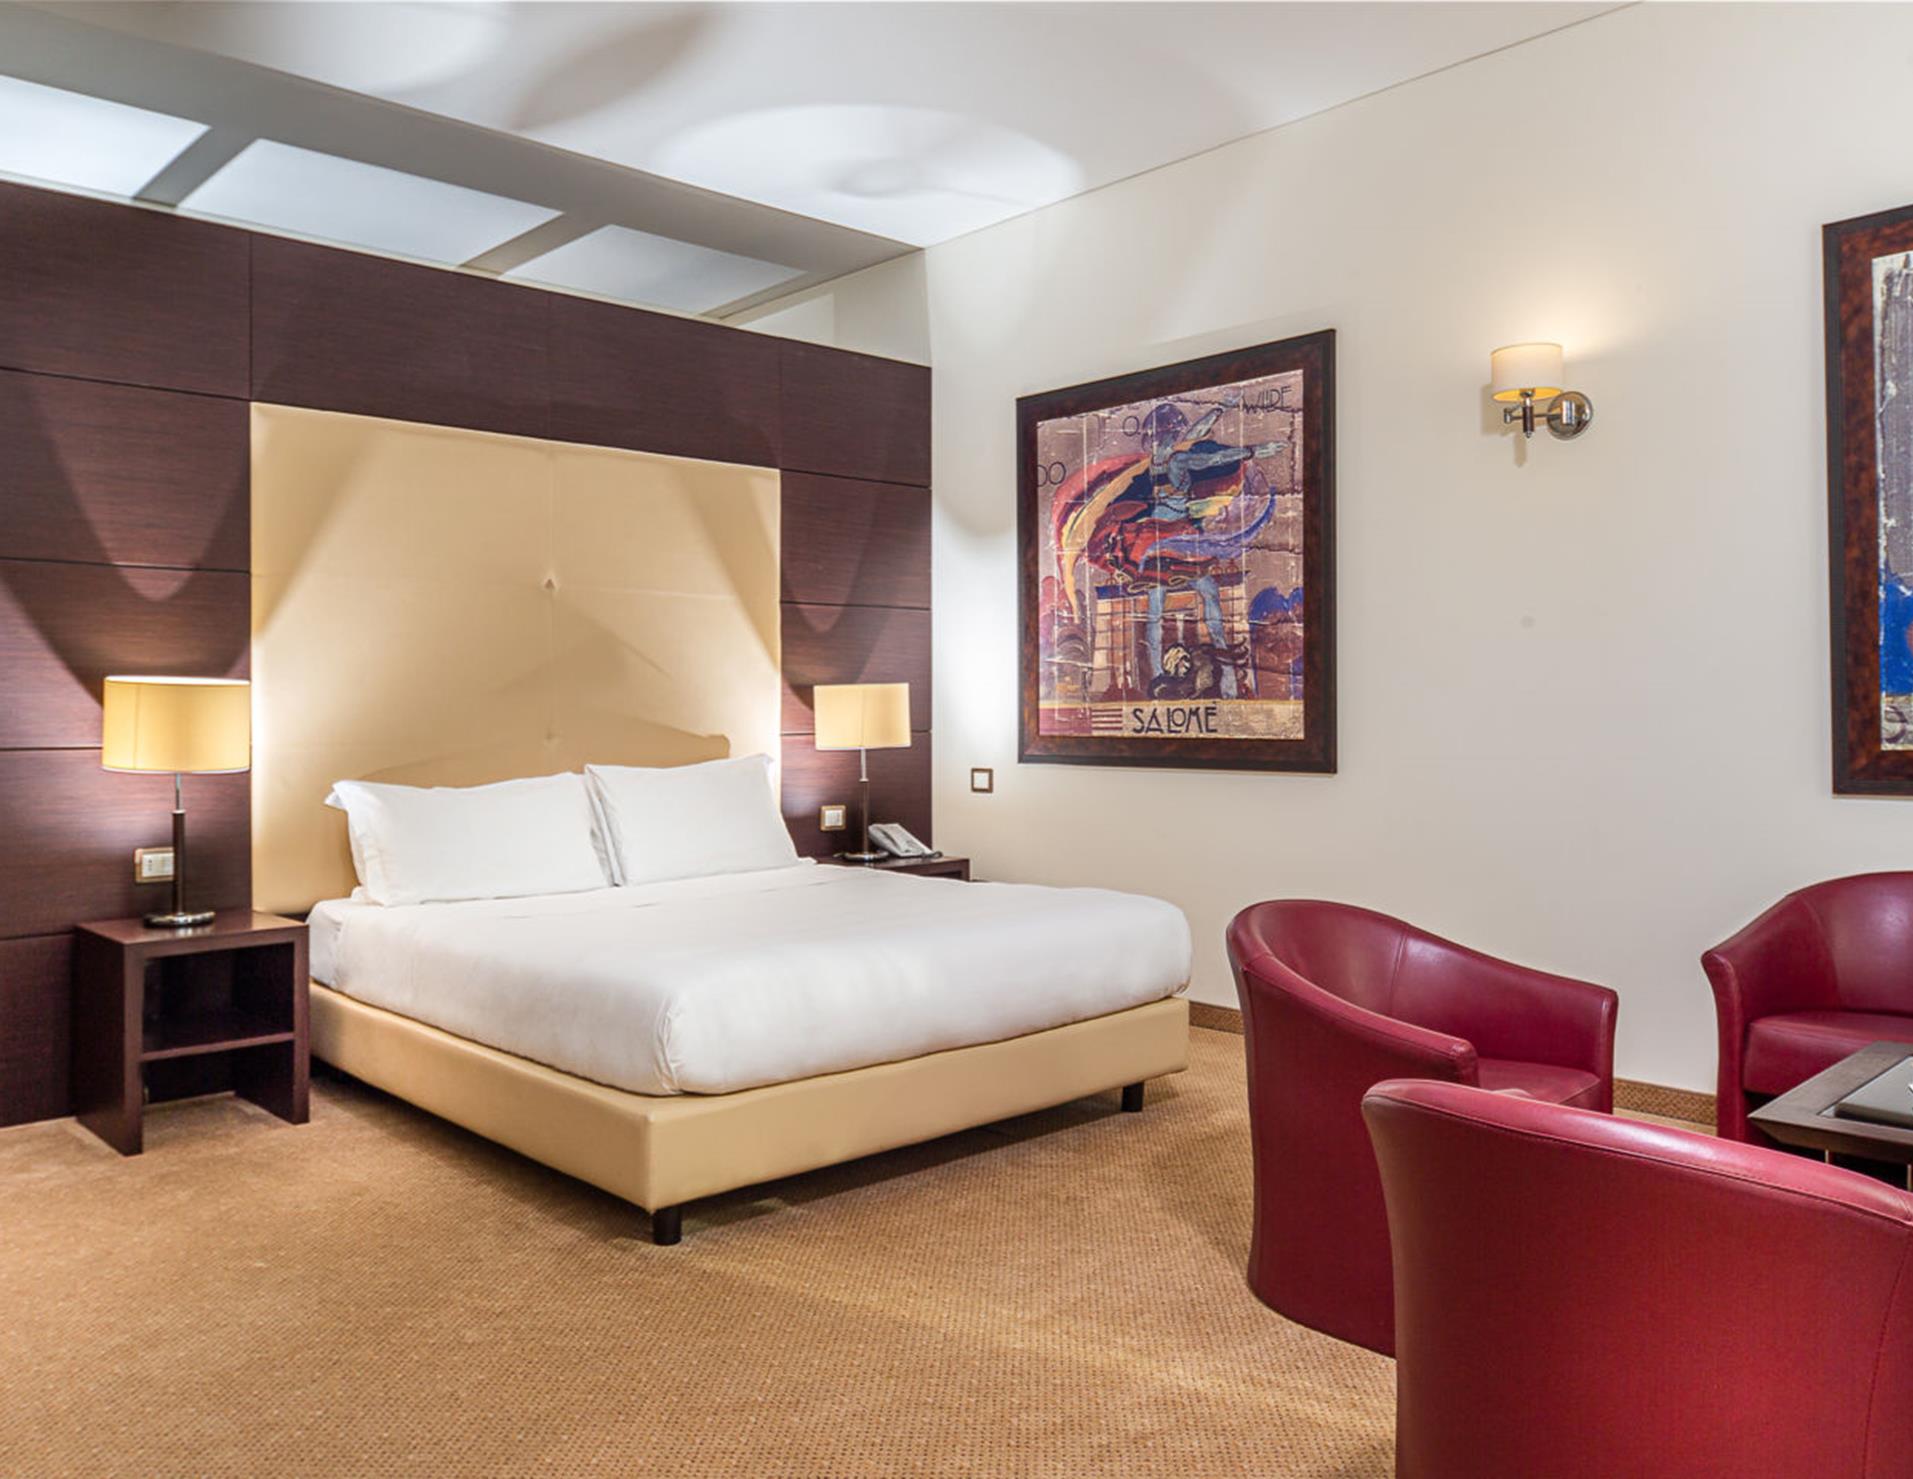 Europalace Hotel - Room 2